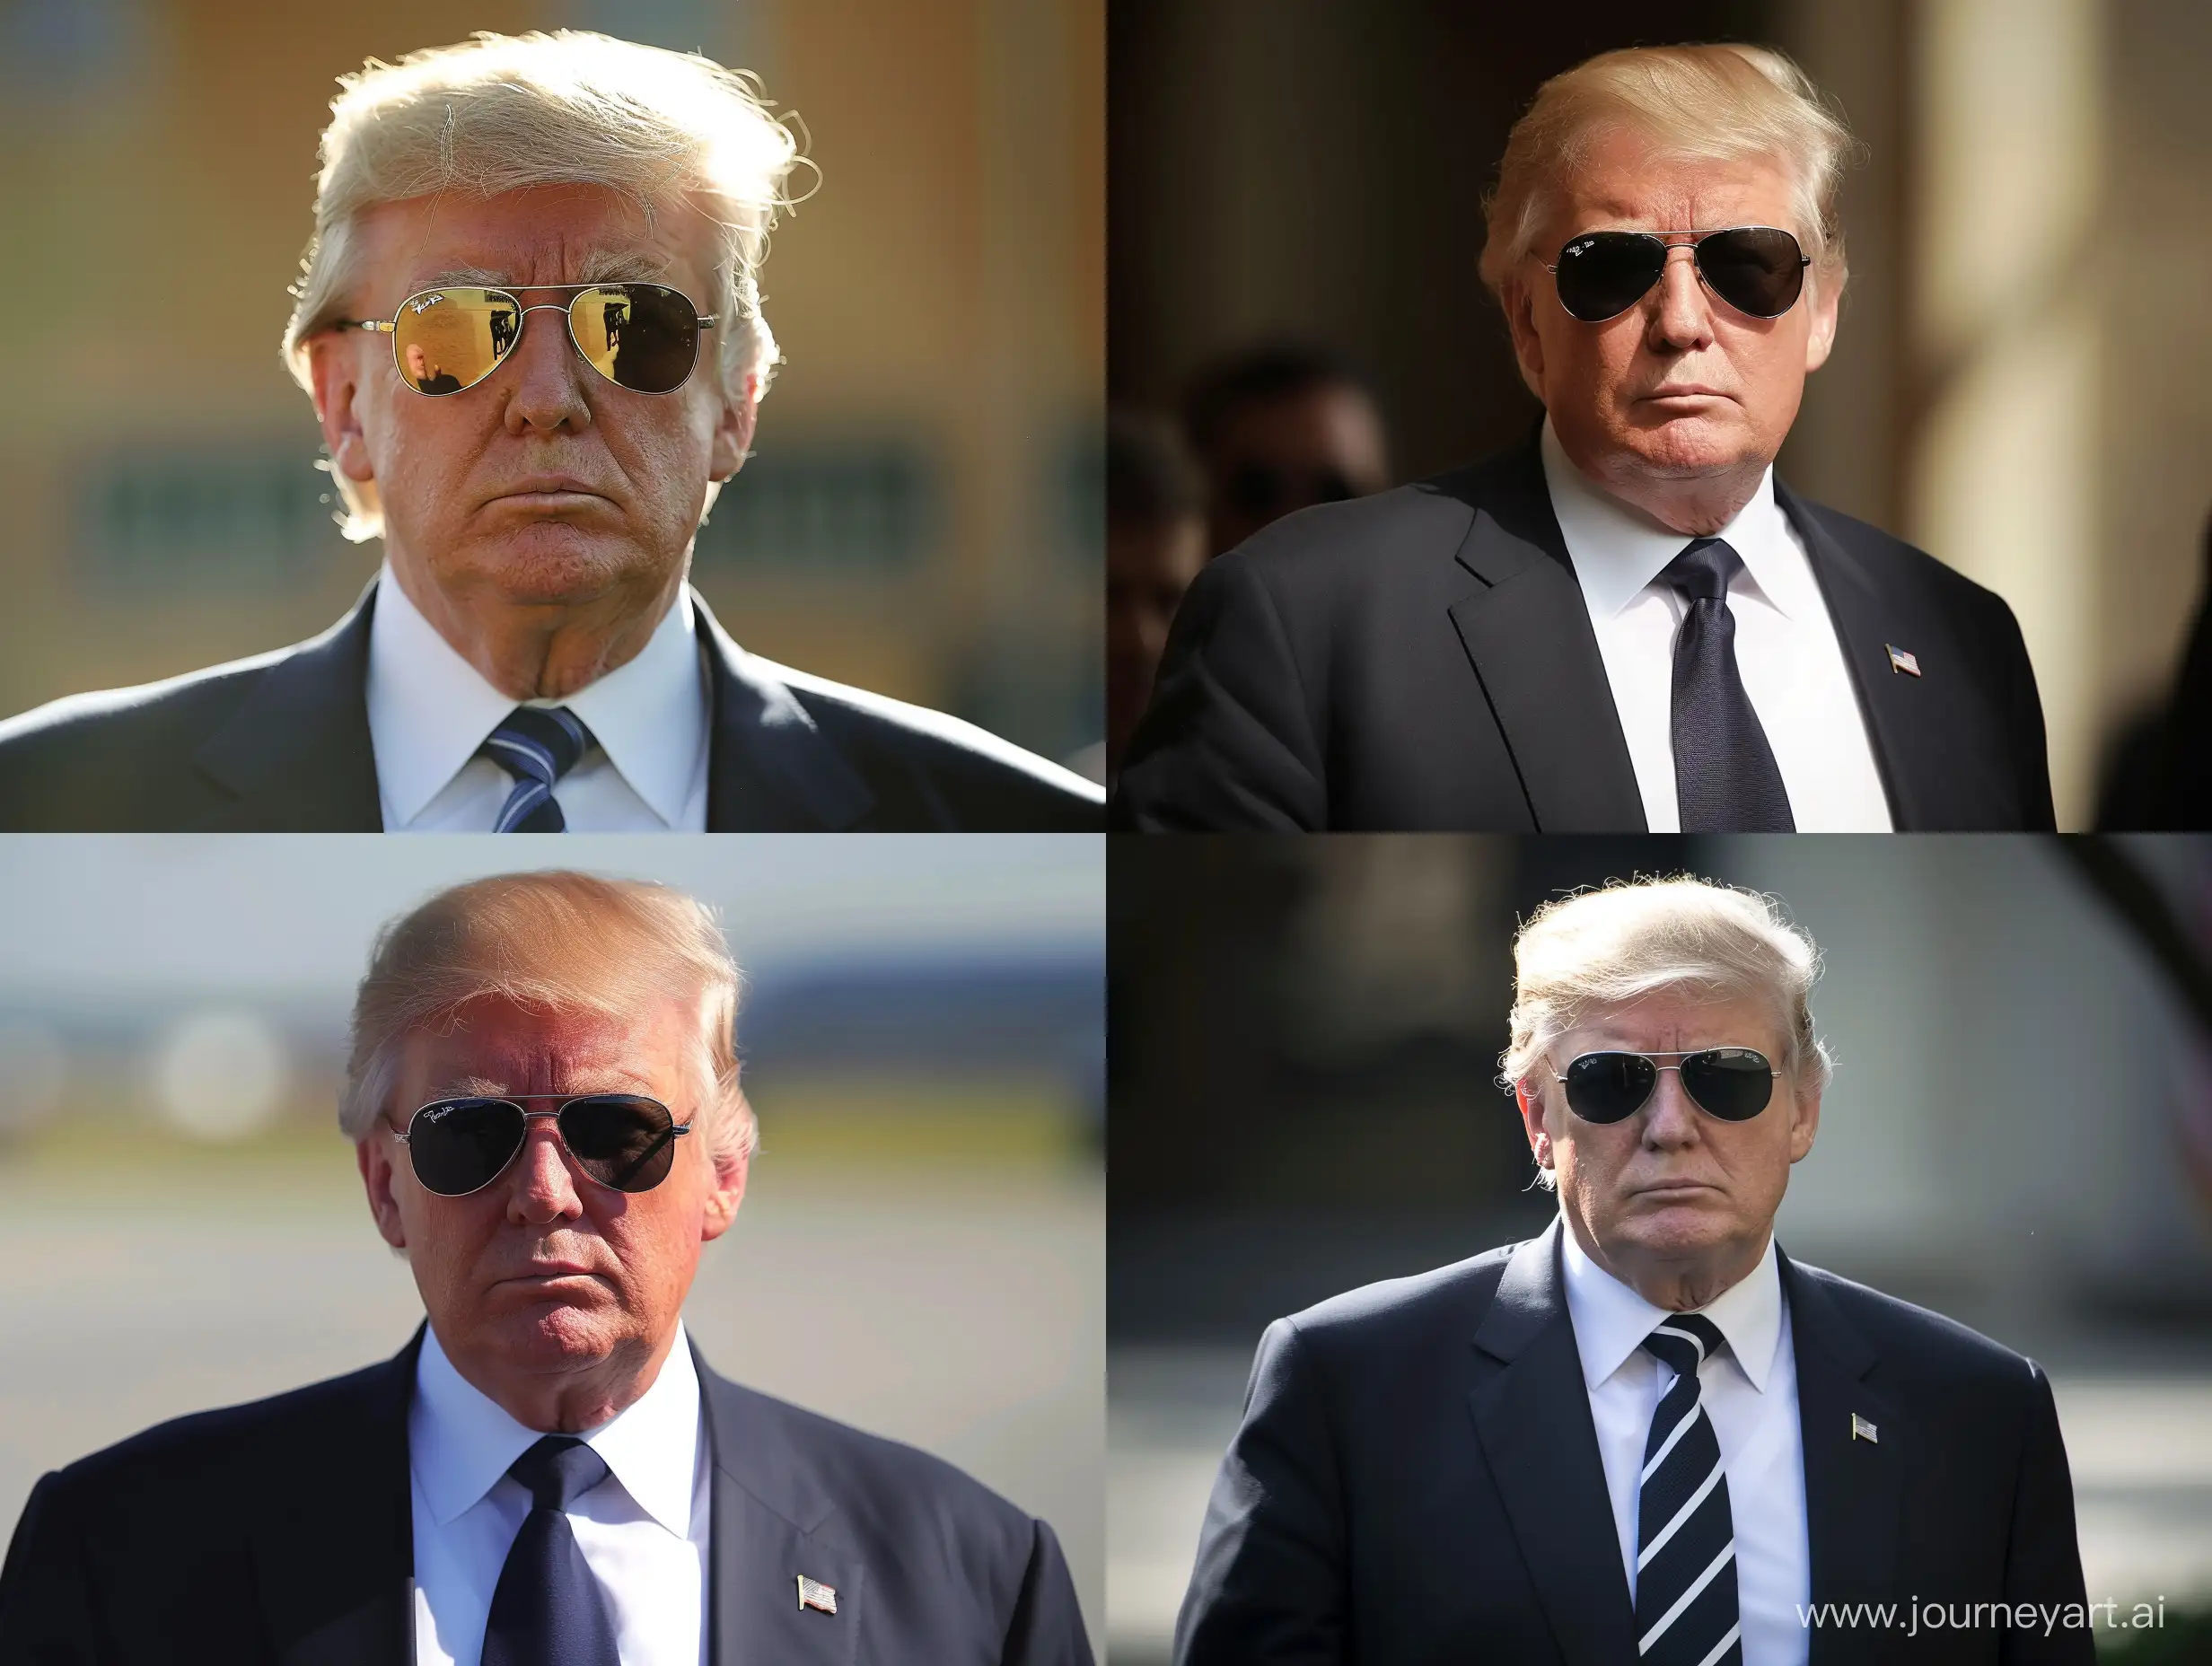 Donald Trump with sunglasses